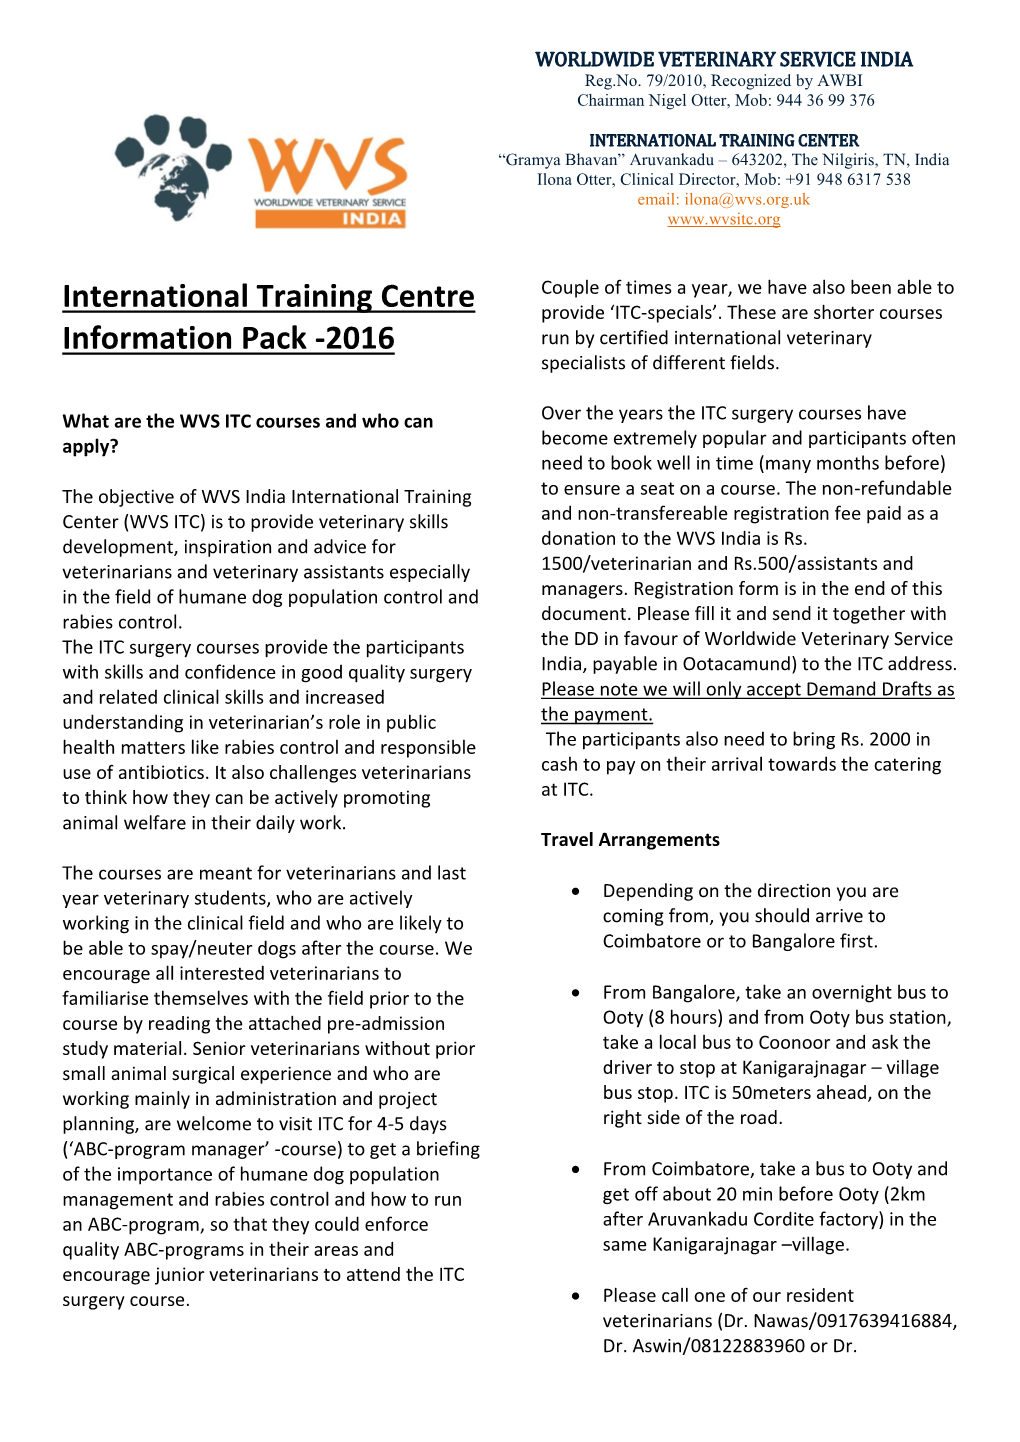 International Training Centre Information Pack -2016